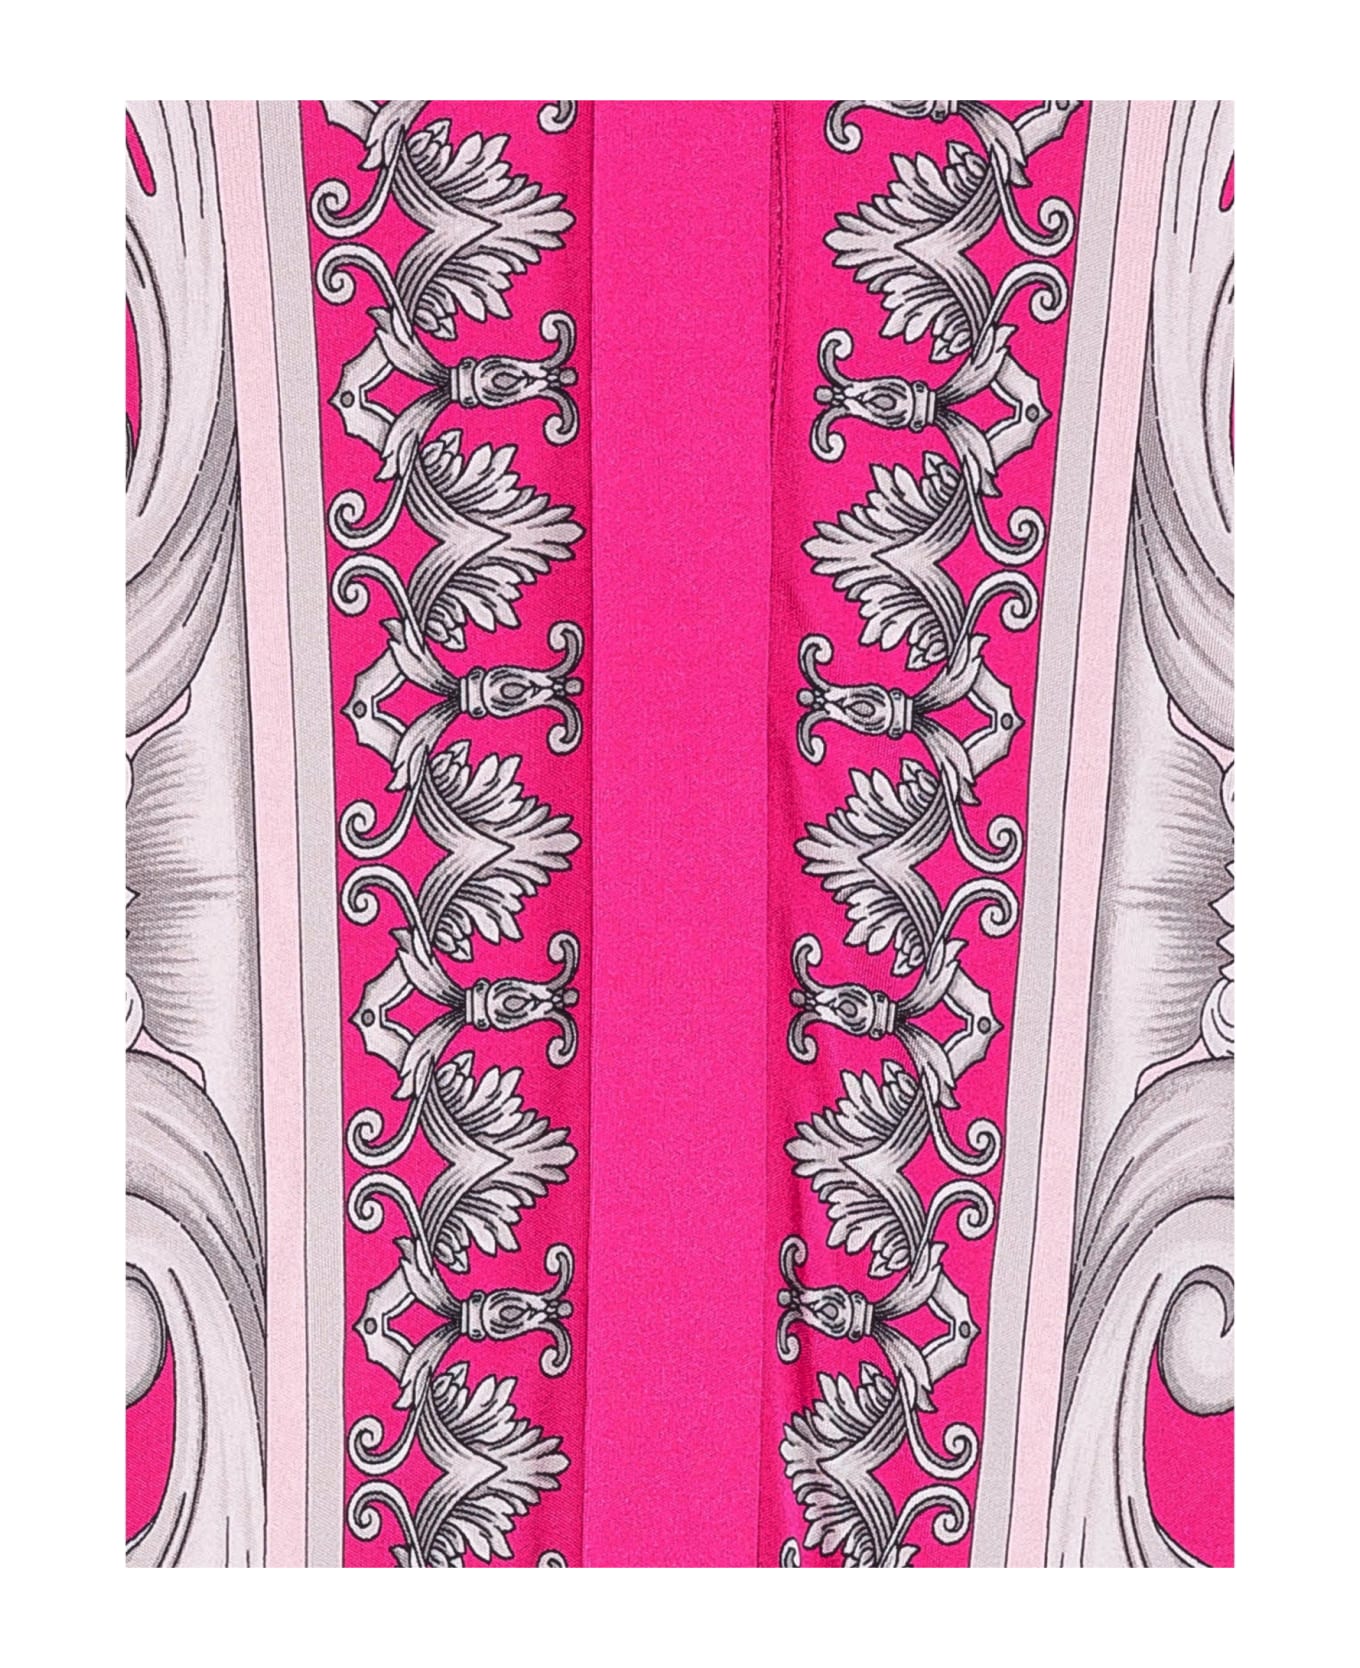 Versace Baroque Printed Midi Dress - Pink